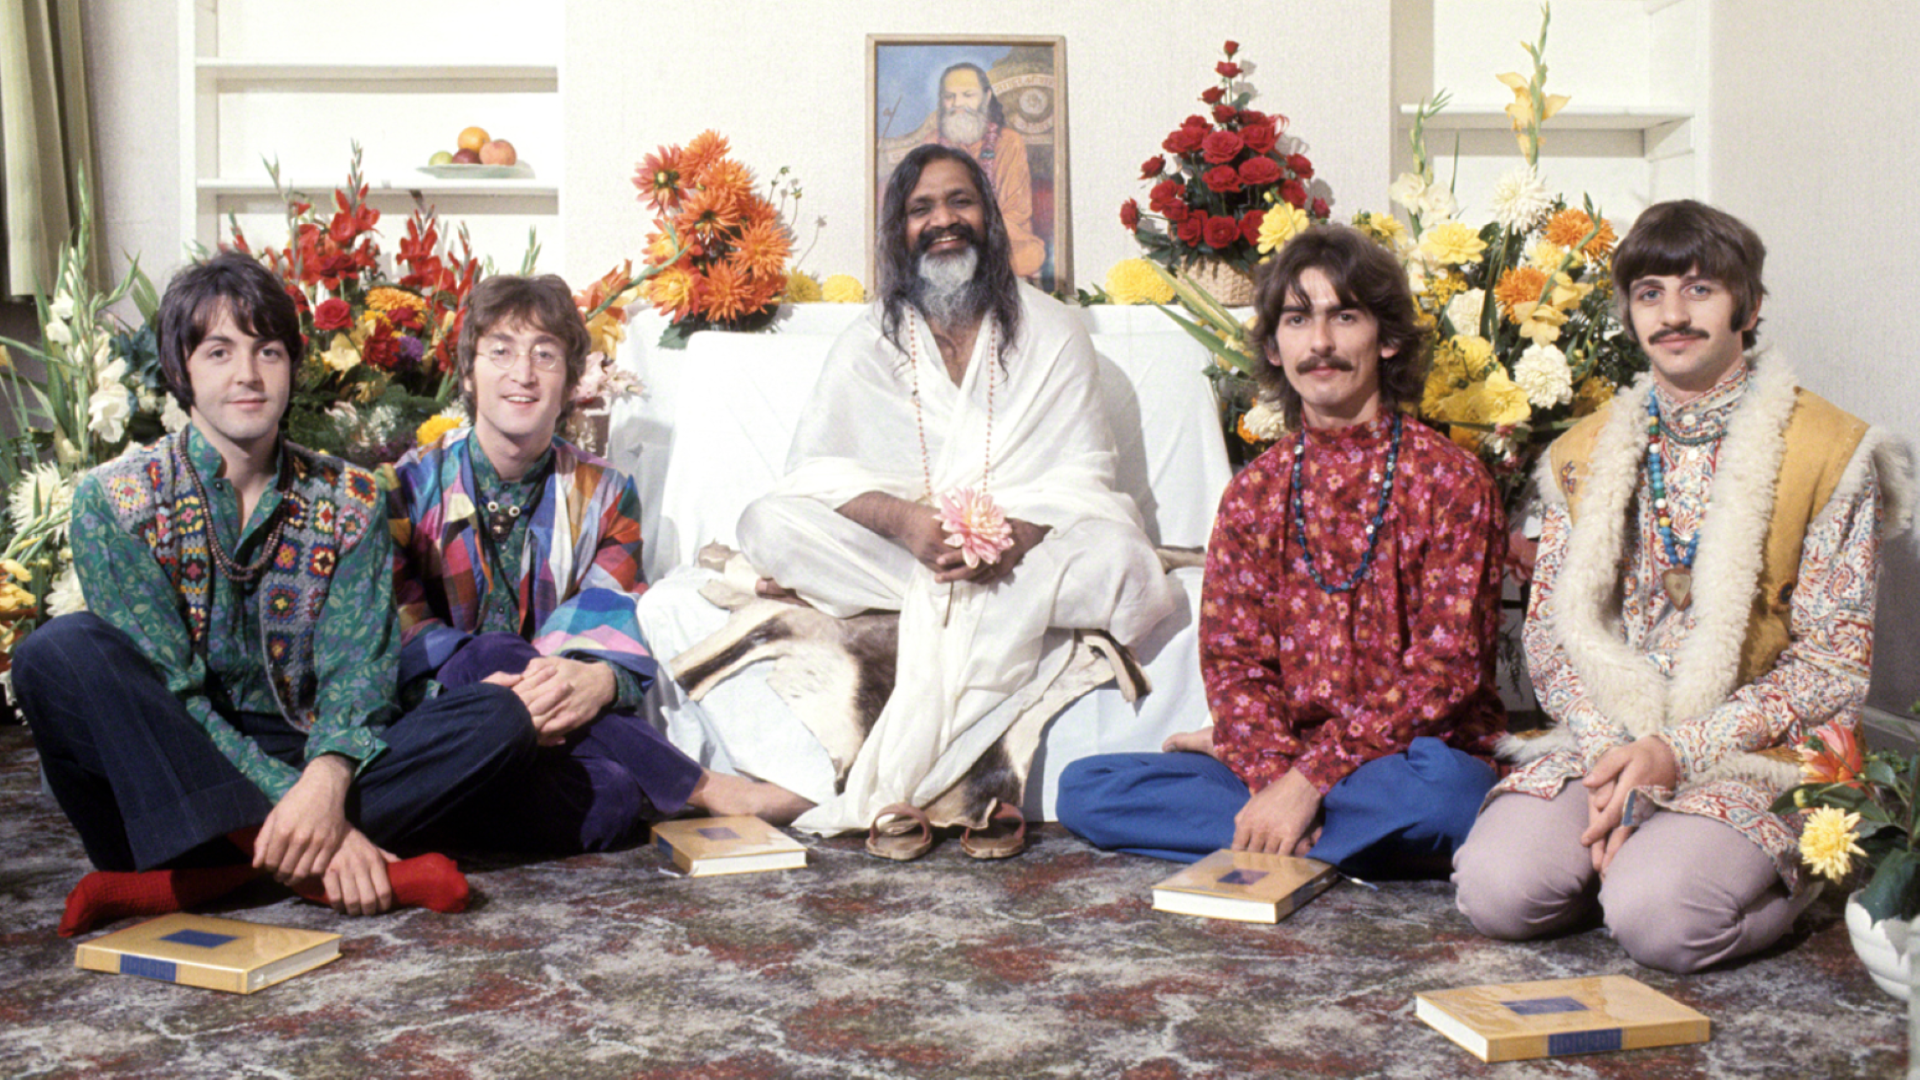 People 1920x1080 The Beatles Paul McCartney George Harrison John Lennon Ringo Starr Maharishi Mahesh Yogi band men